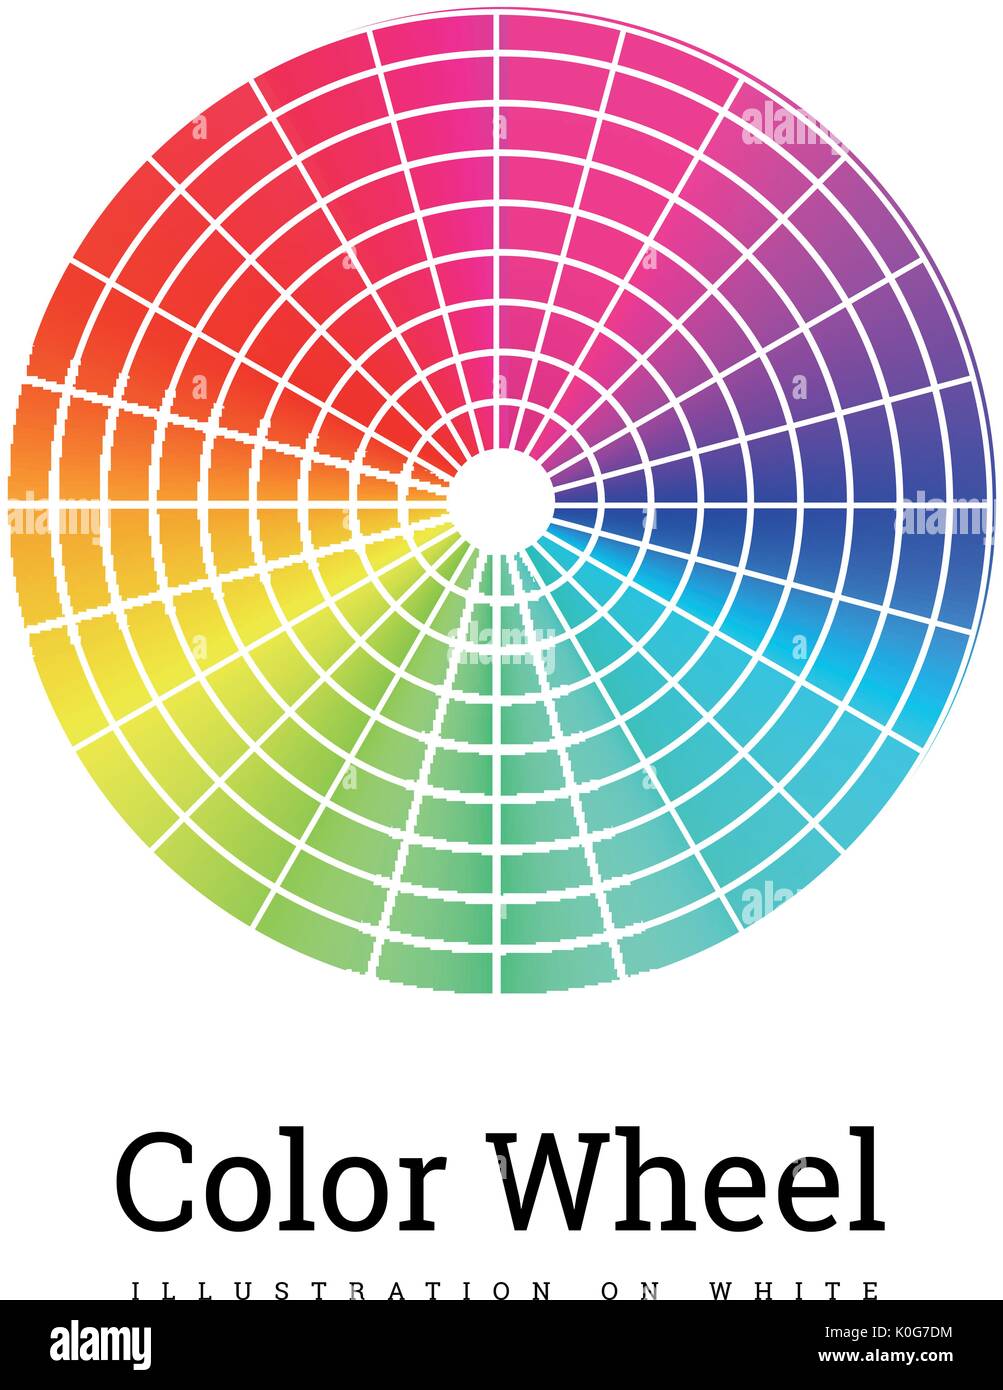 https://c8.alamy.com/comp/K0G7DM/color-wheel-vector-illustration-K0G7DM.jpg